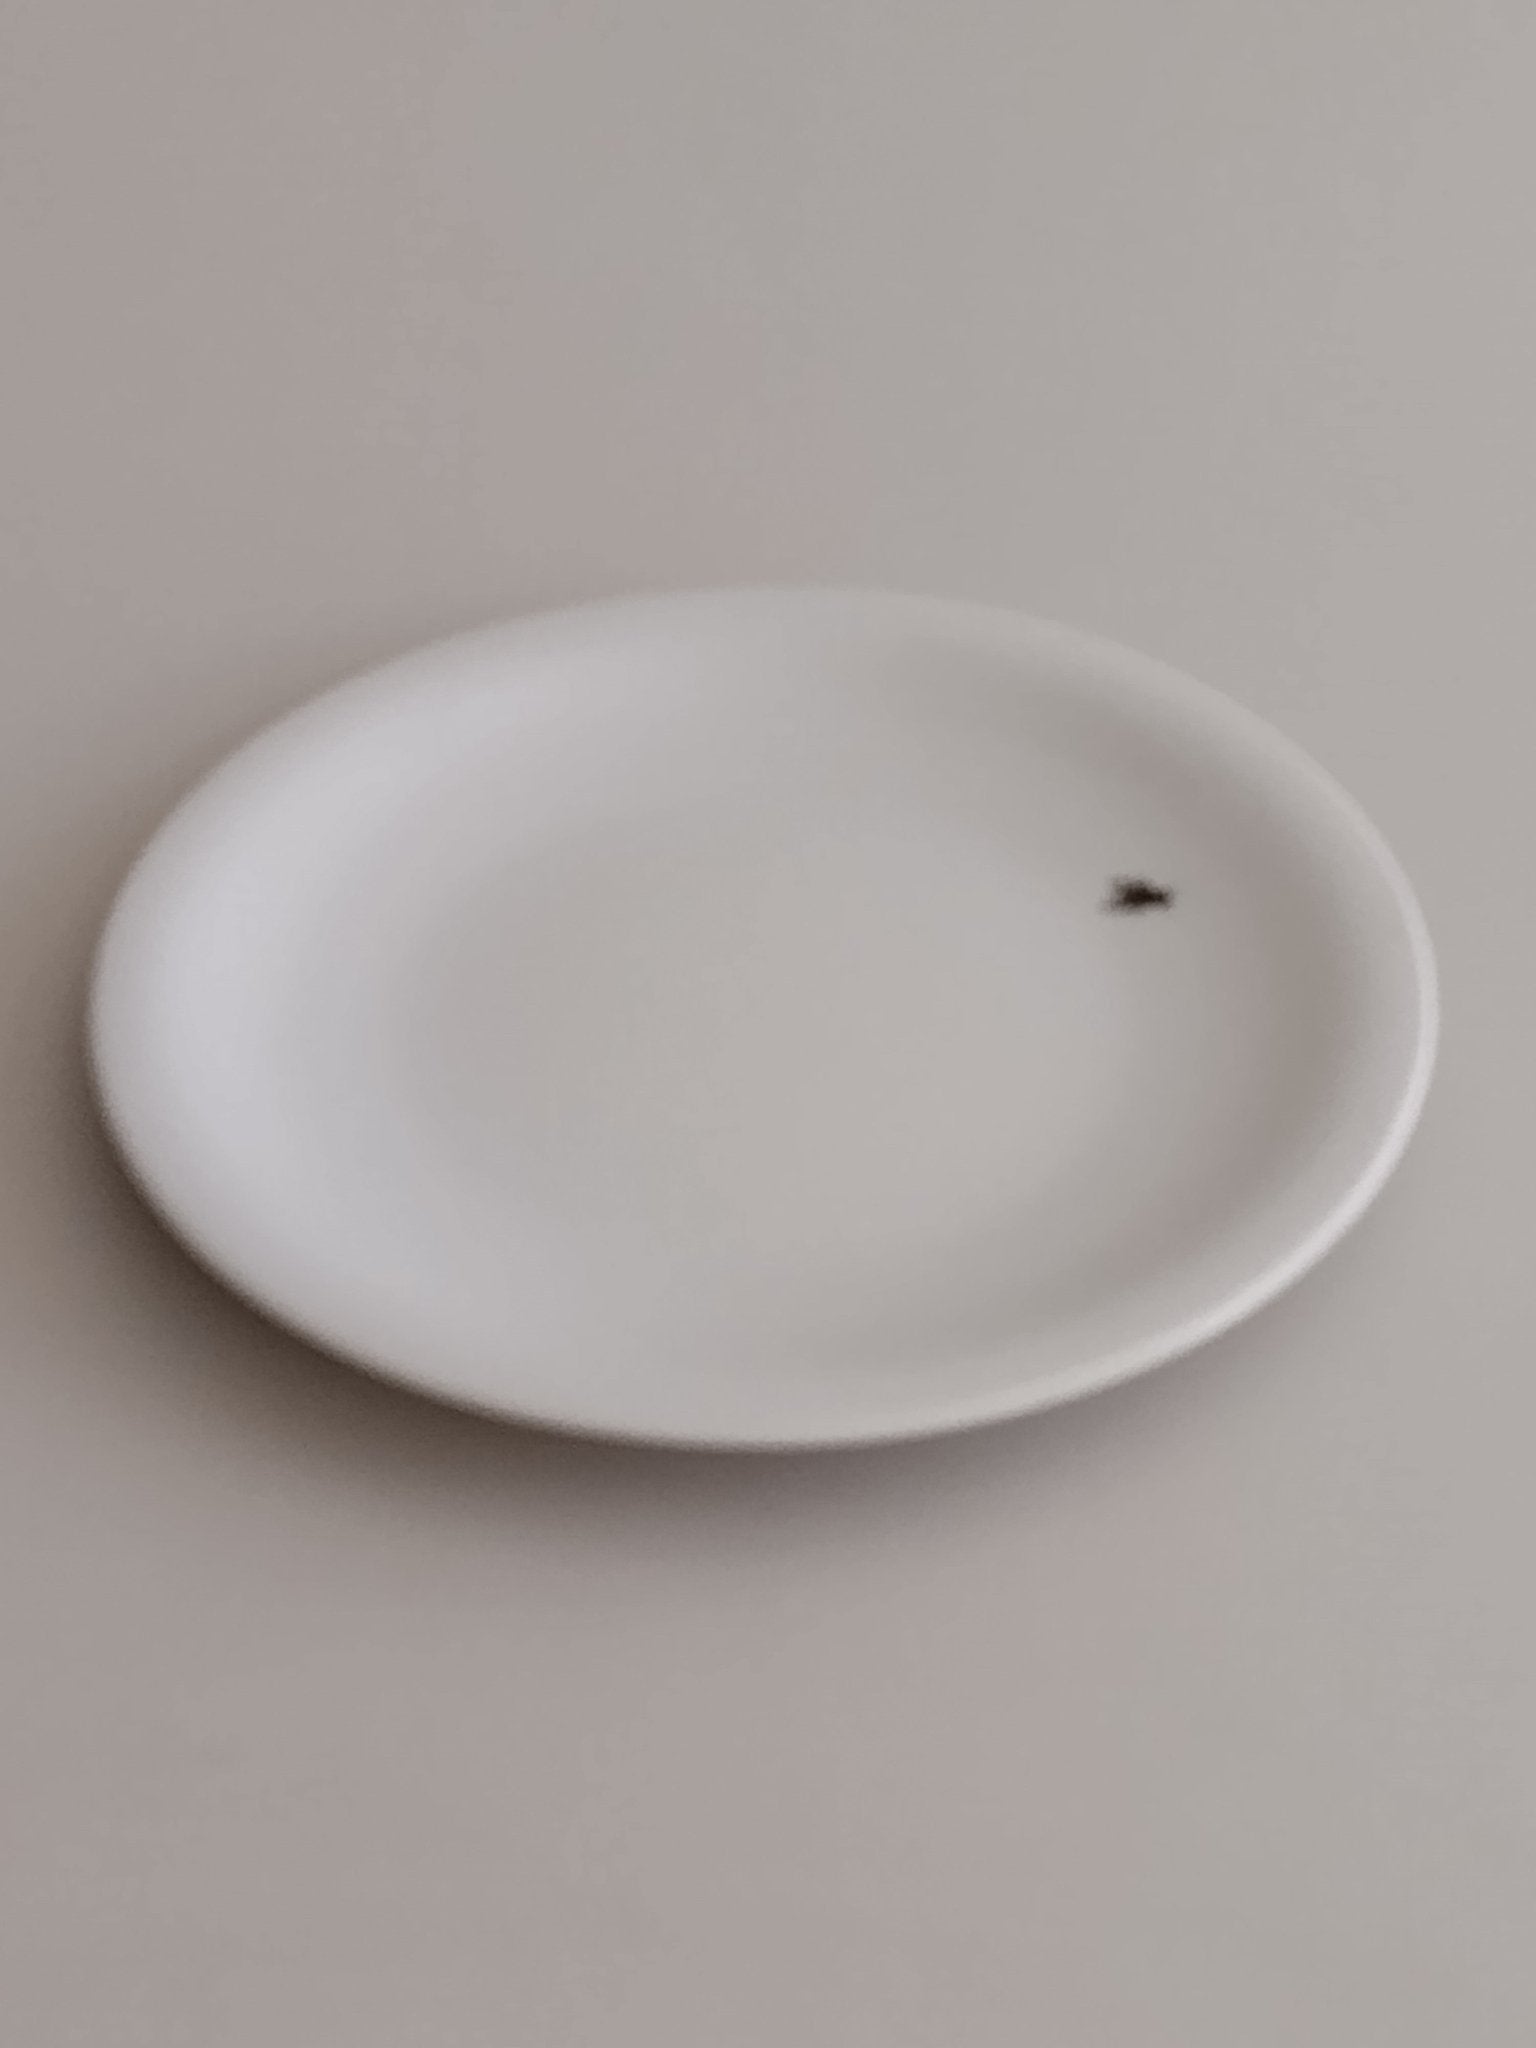 Adam & Ziege-Wit porseleinen bordje 22 cm, met vlieg - Schreuder-kraan.shop